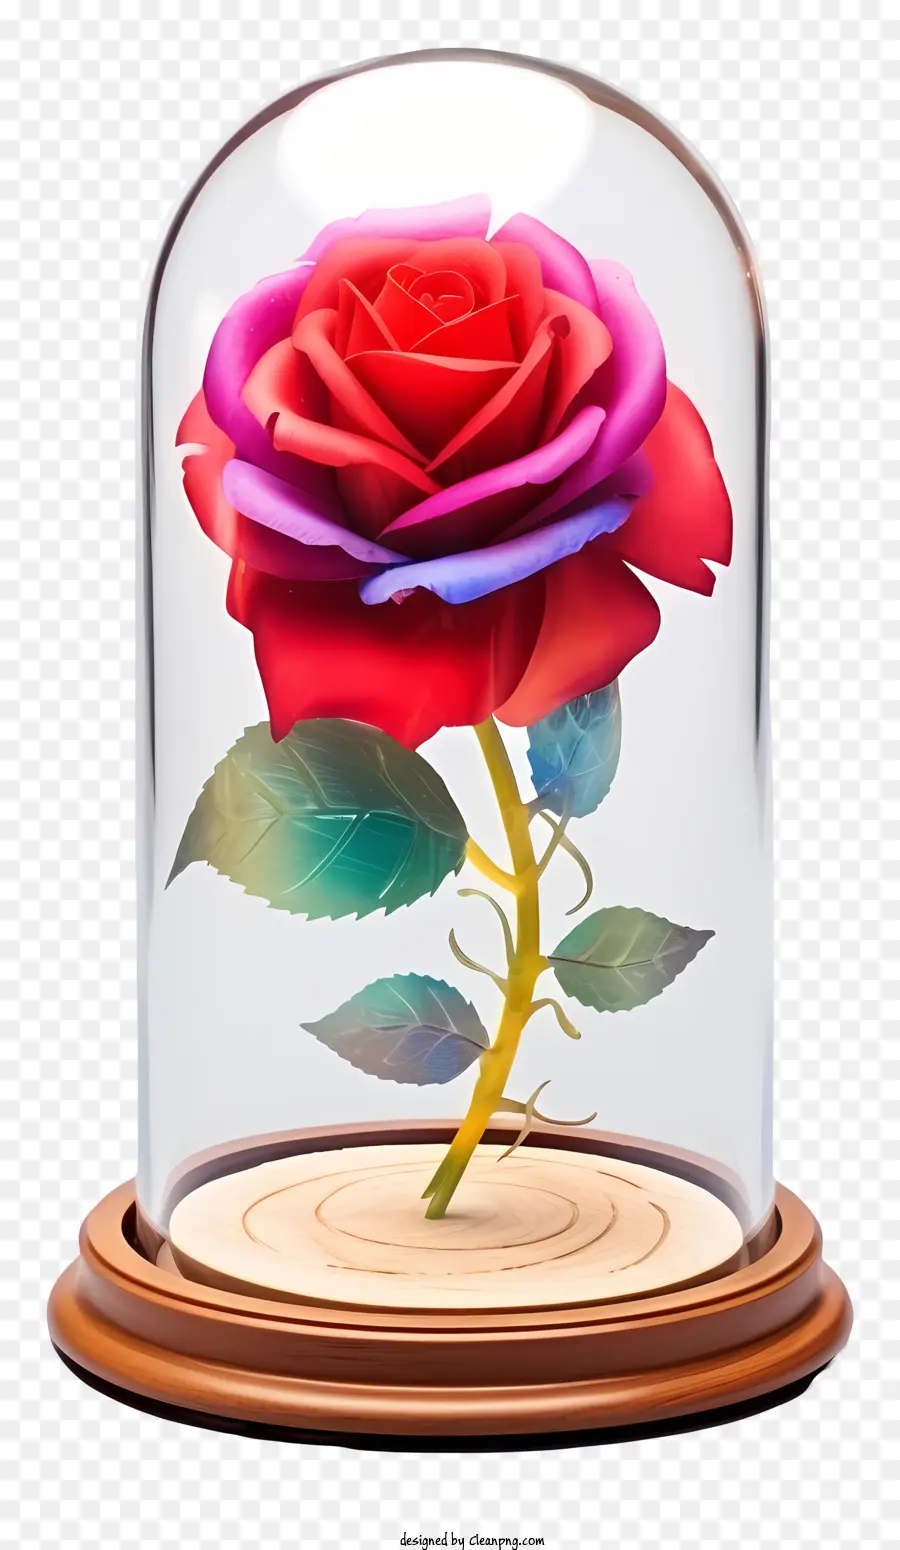 rosa - Rosa rosa in cupola di vetro, luminosa e reale